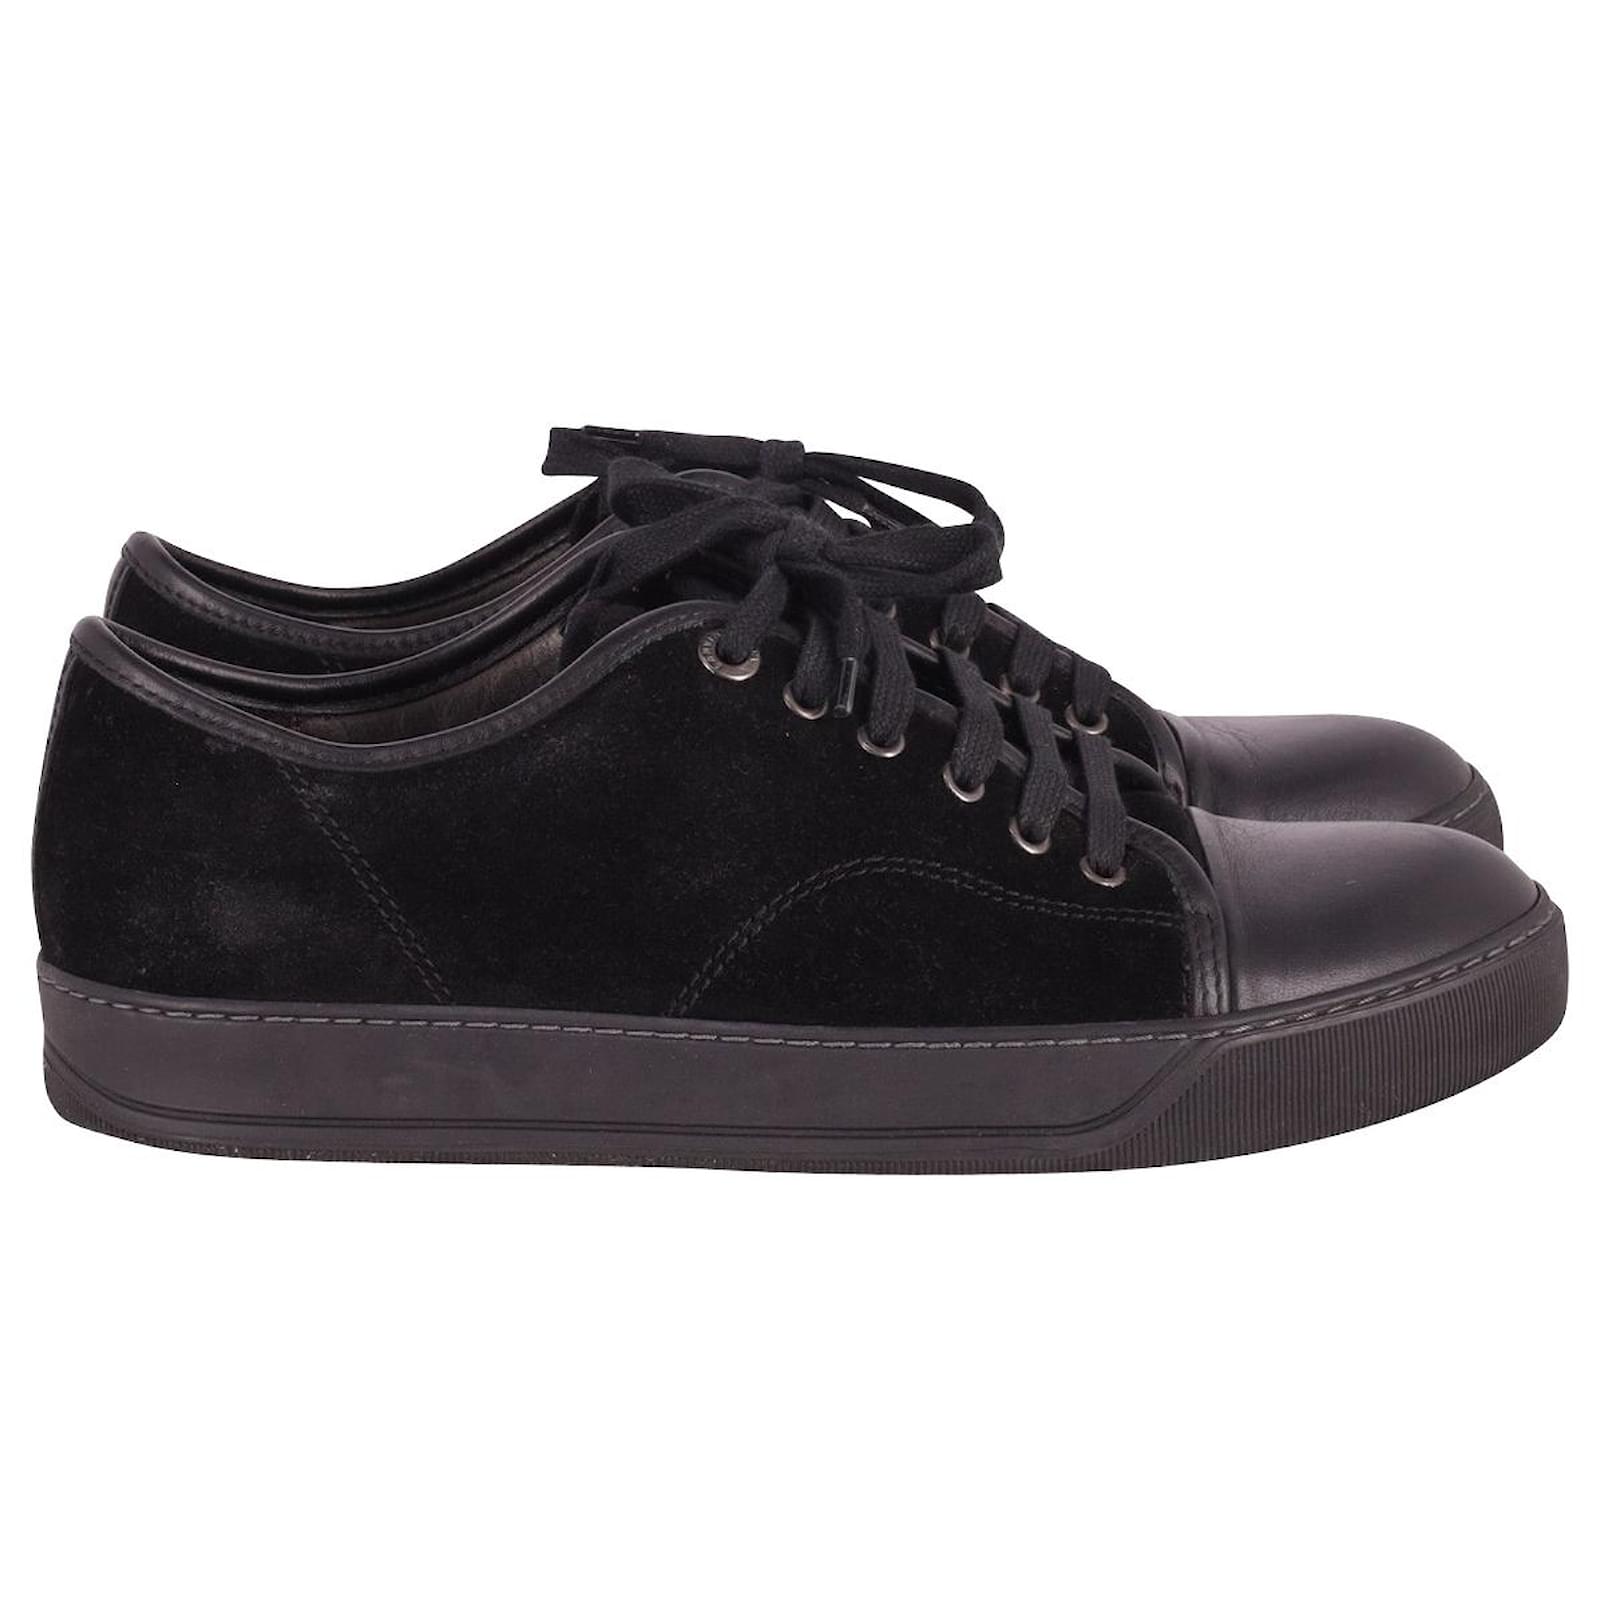 Lanvin DBB1 Sneakers in Black Calfskin Leather Pony-style calfskin ref ...